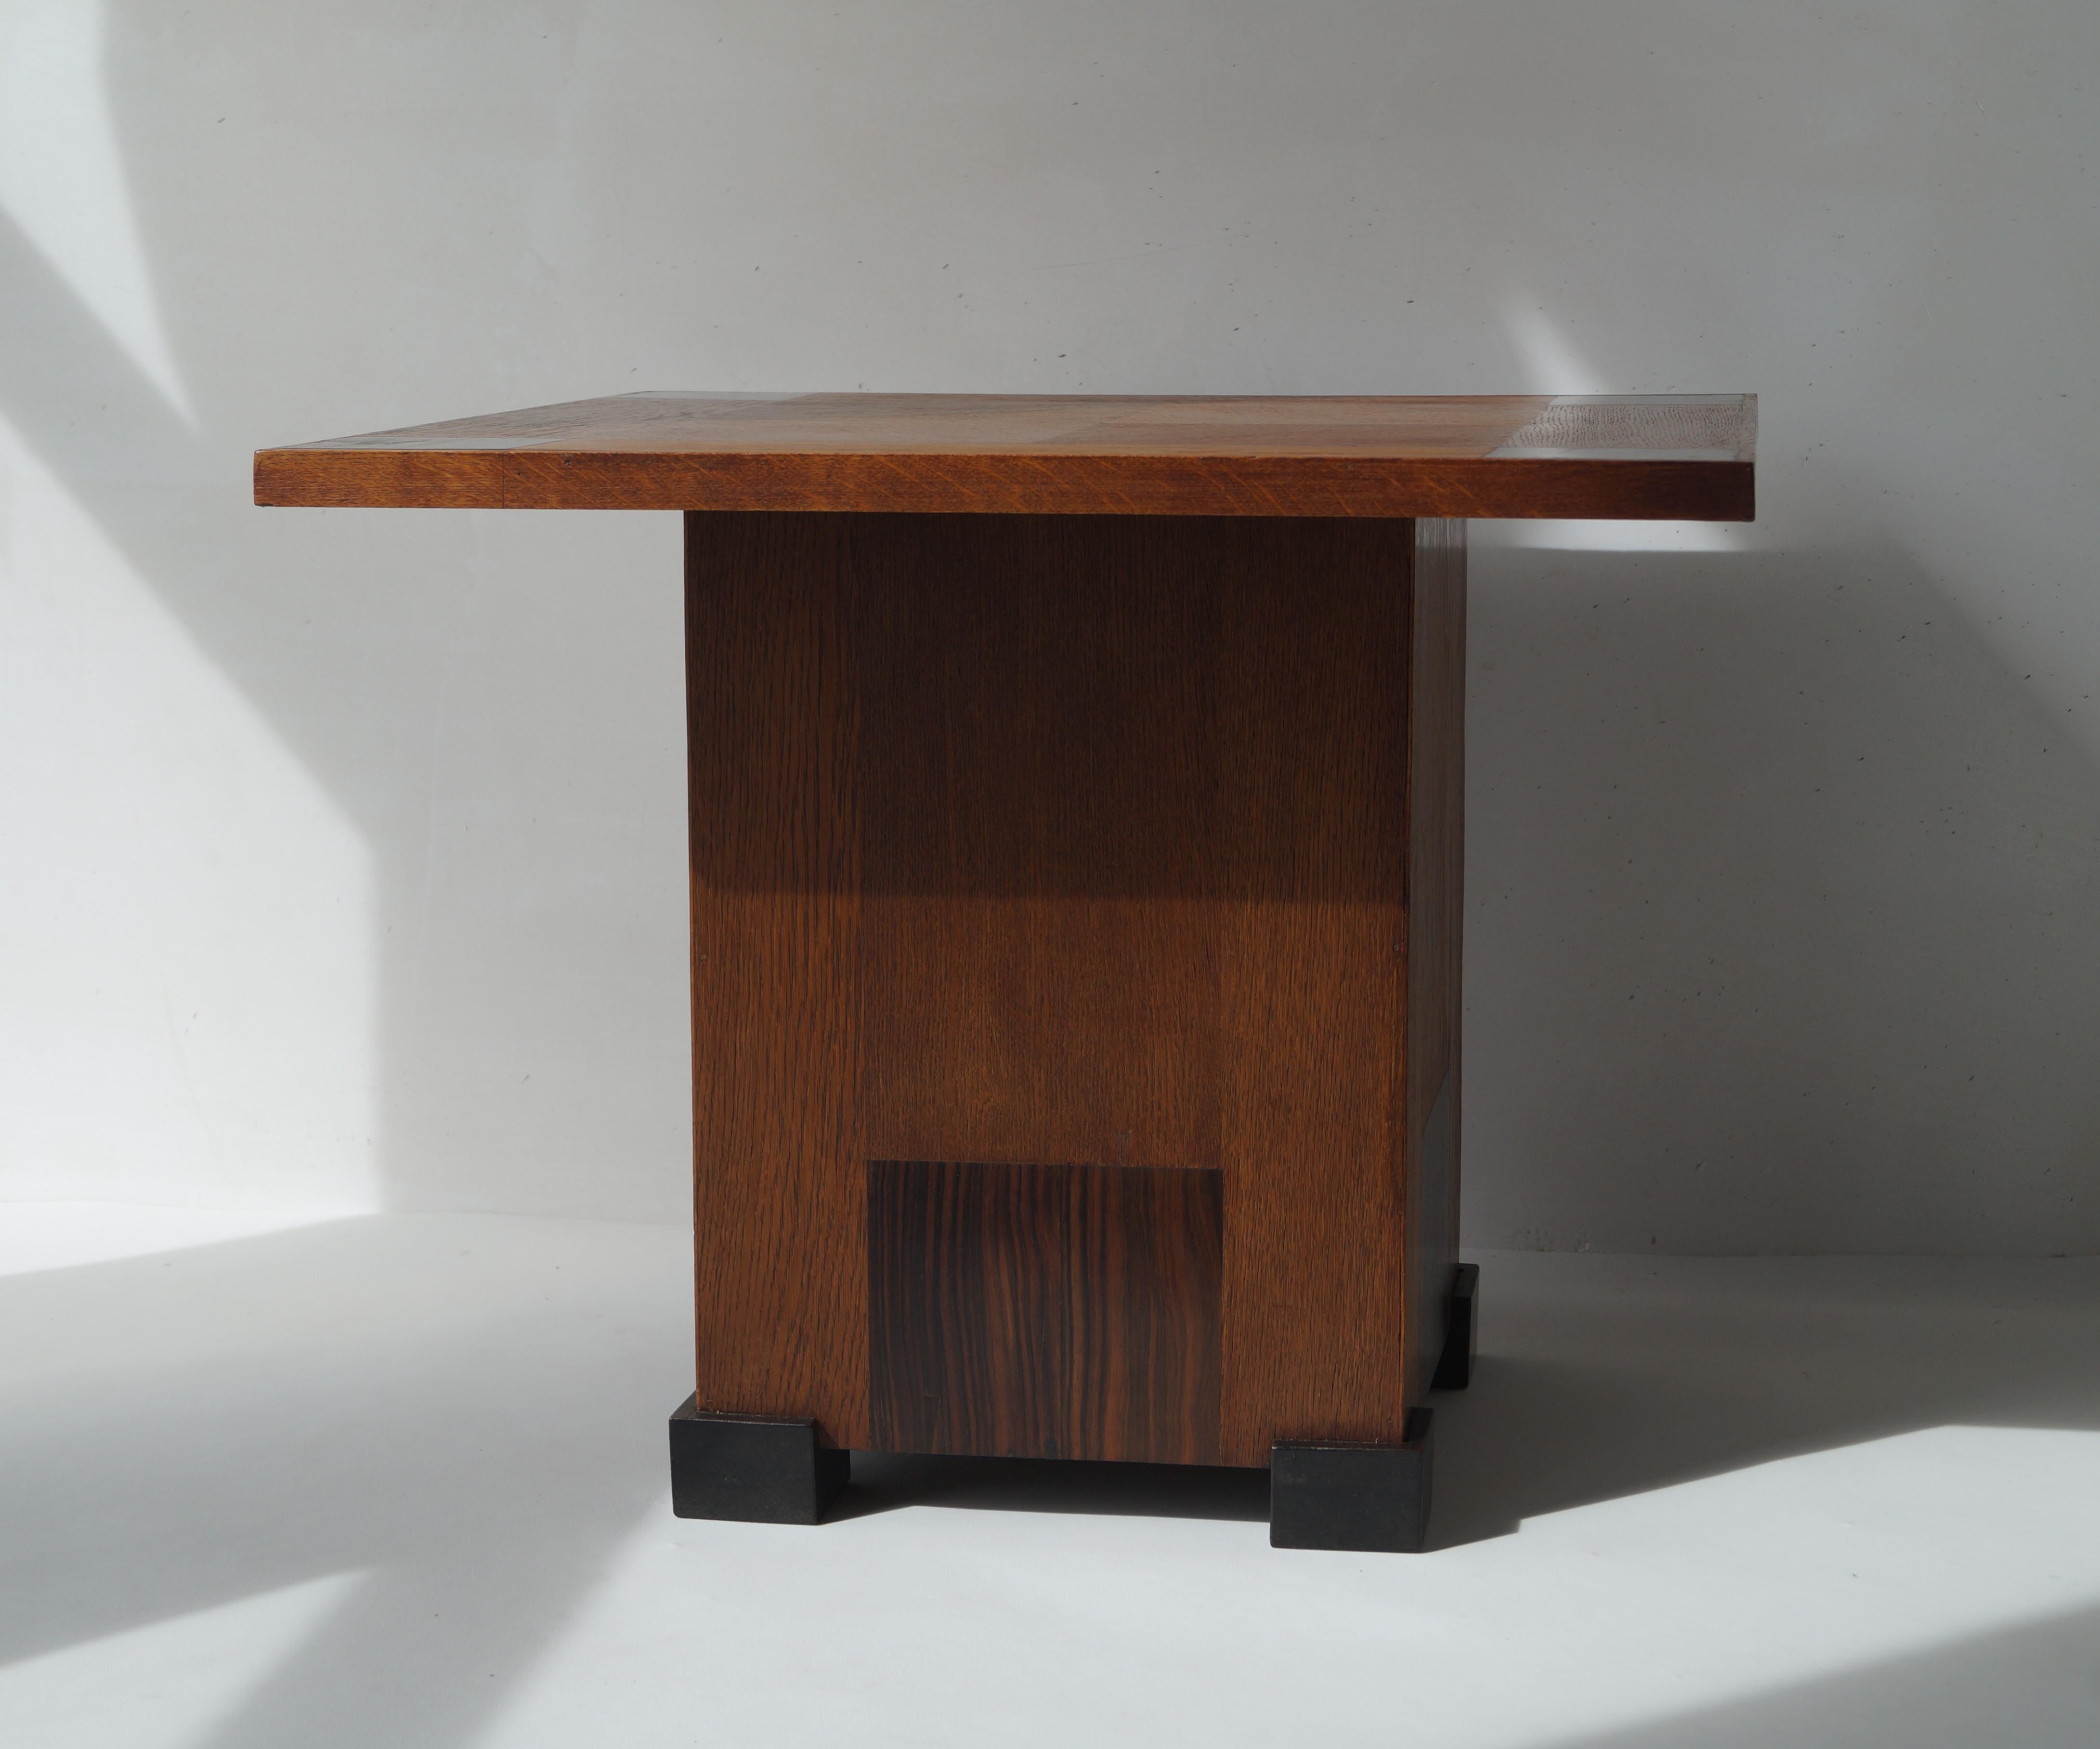 Dutch Art Deco Modernist coffee table in style of P.E.L. Izeren, 1920s For Sale 2